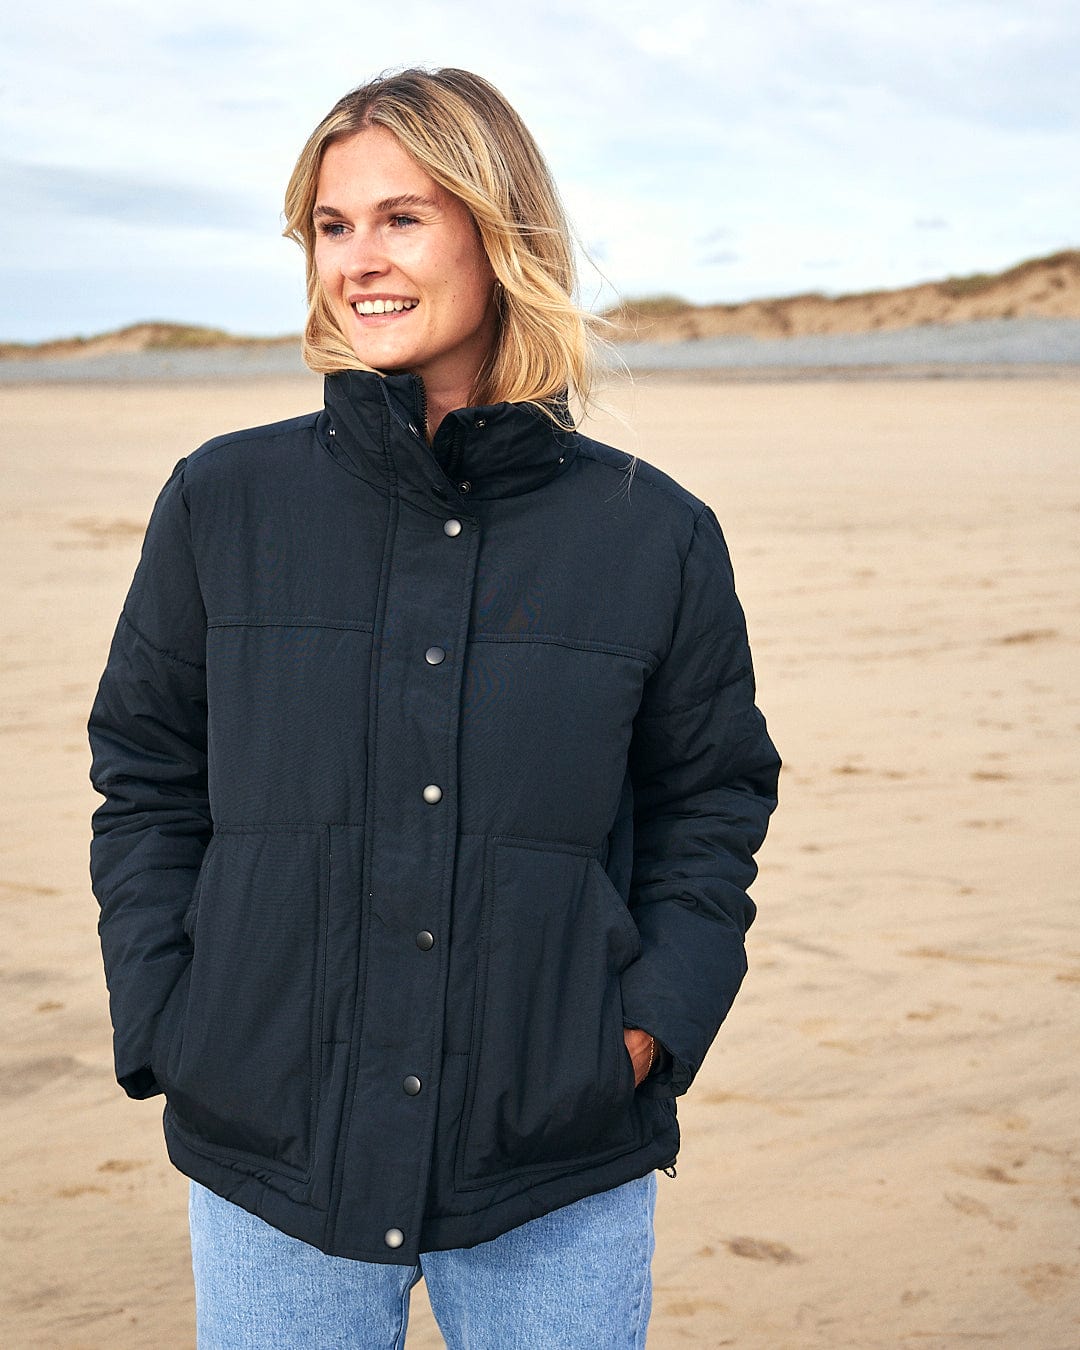 A woman is standing on a beach wearing a Saltrock Aspen - Womens Short Puffer Jacket - Black with a detachable hood.